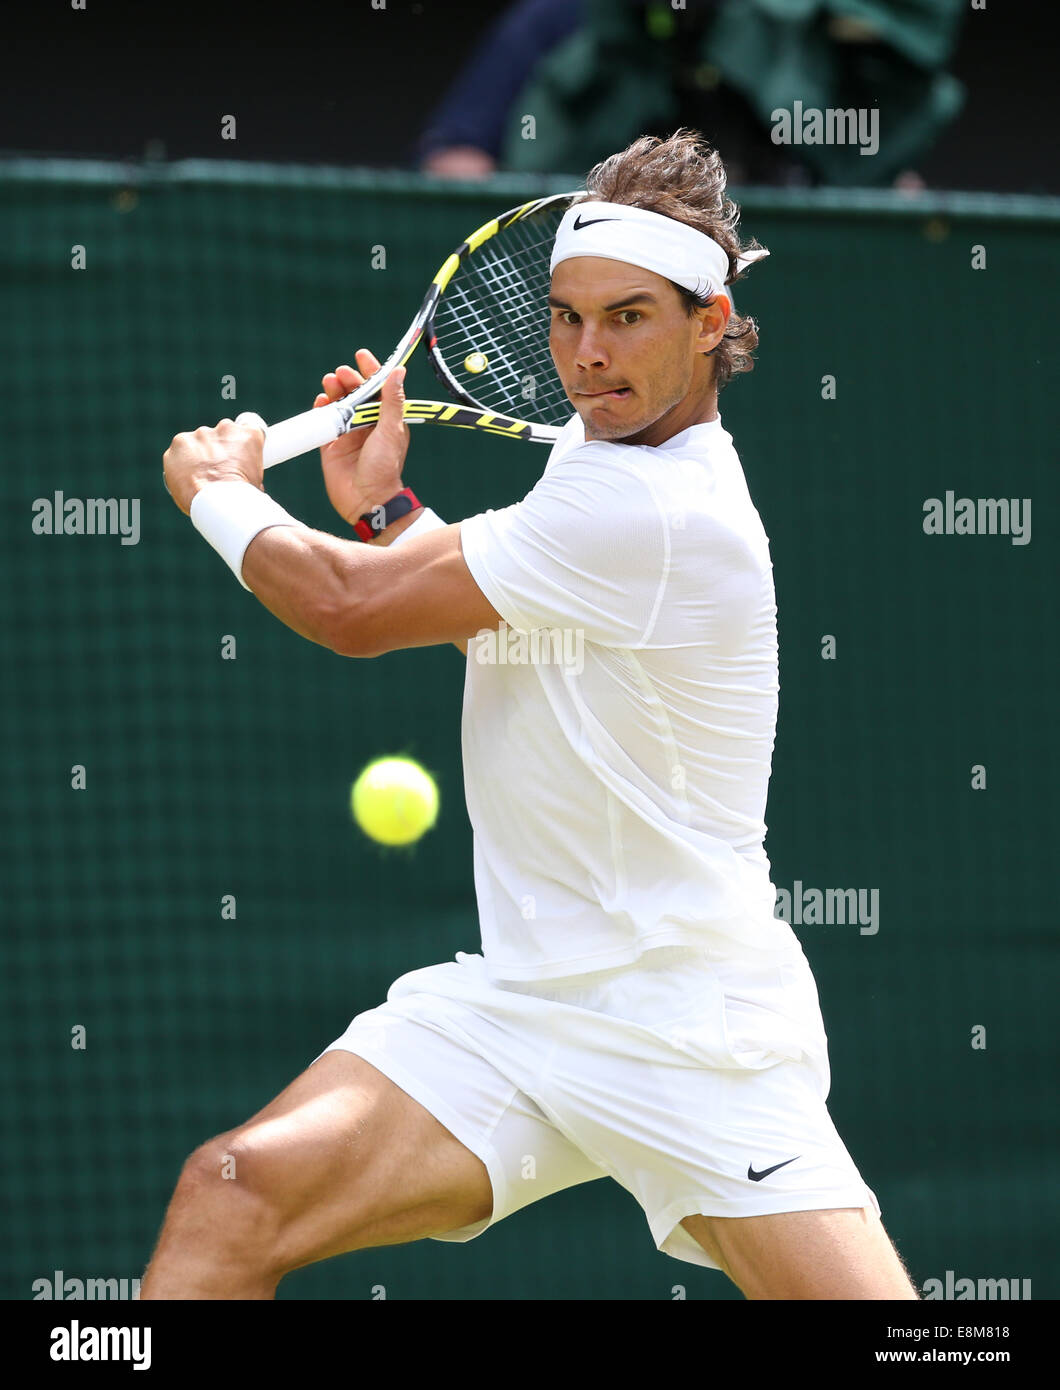 Rafael Nadal (ESP), Wimbledon Championships in 2014, London,England. Stock Photo